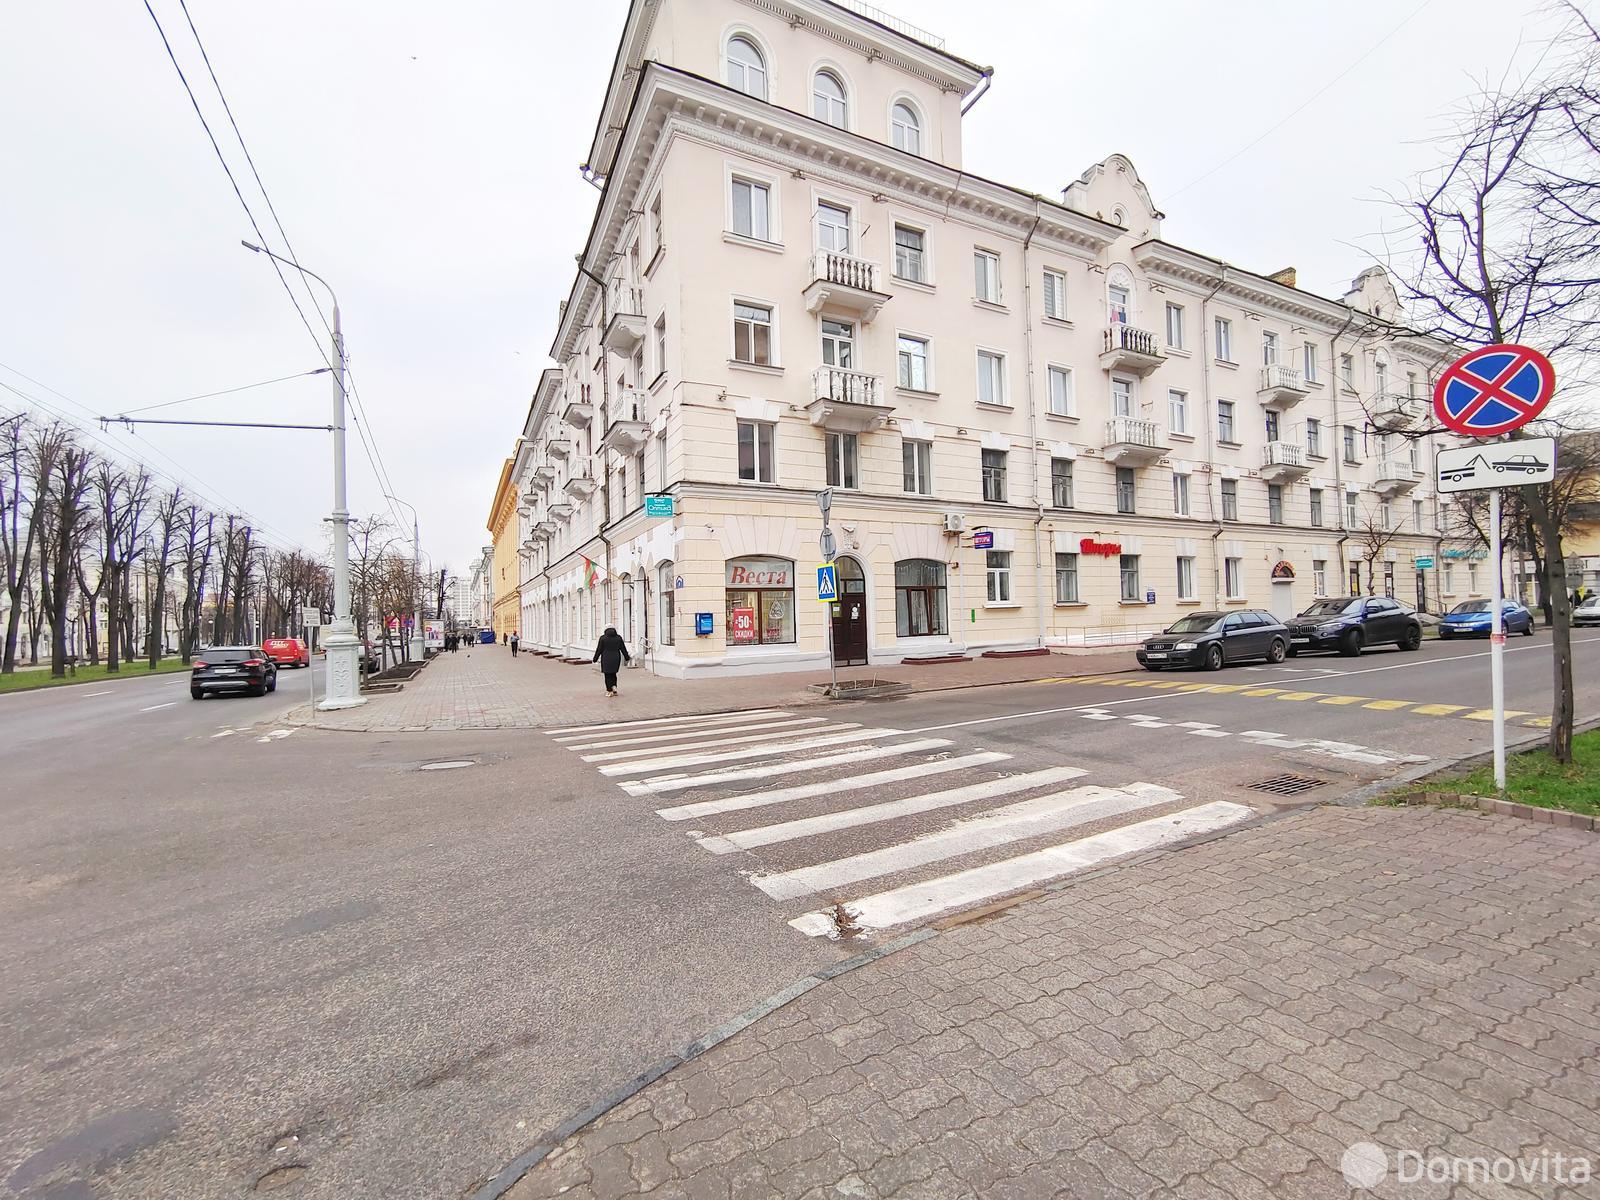 Продажа торговой точки на ул. Кирова, д. 9 в Витебске, 92000USD - фото 1